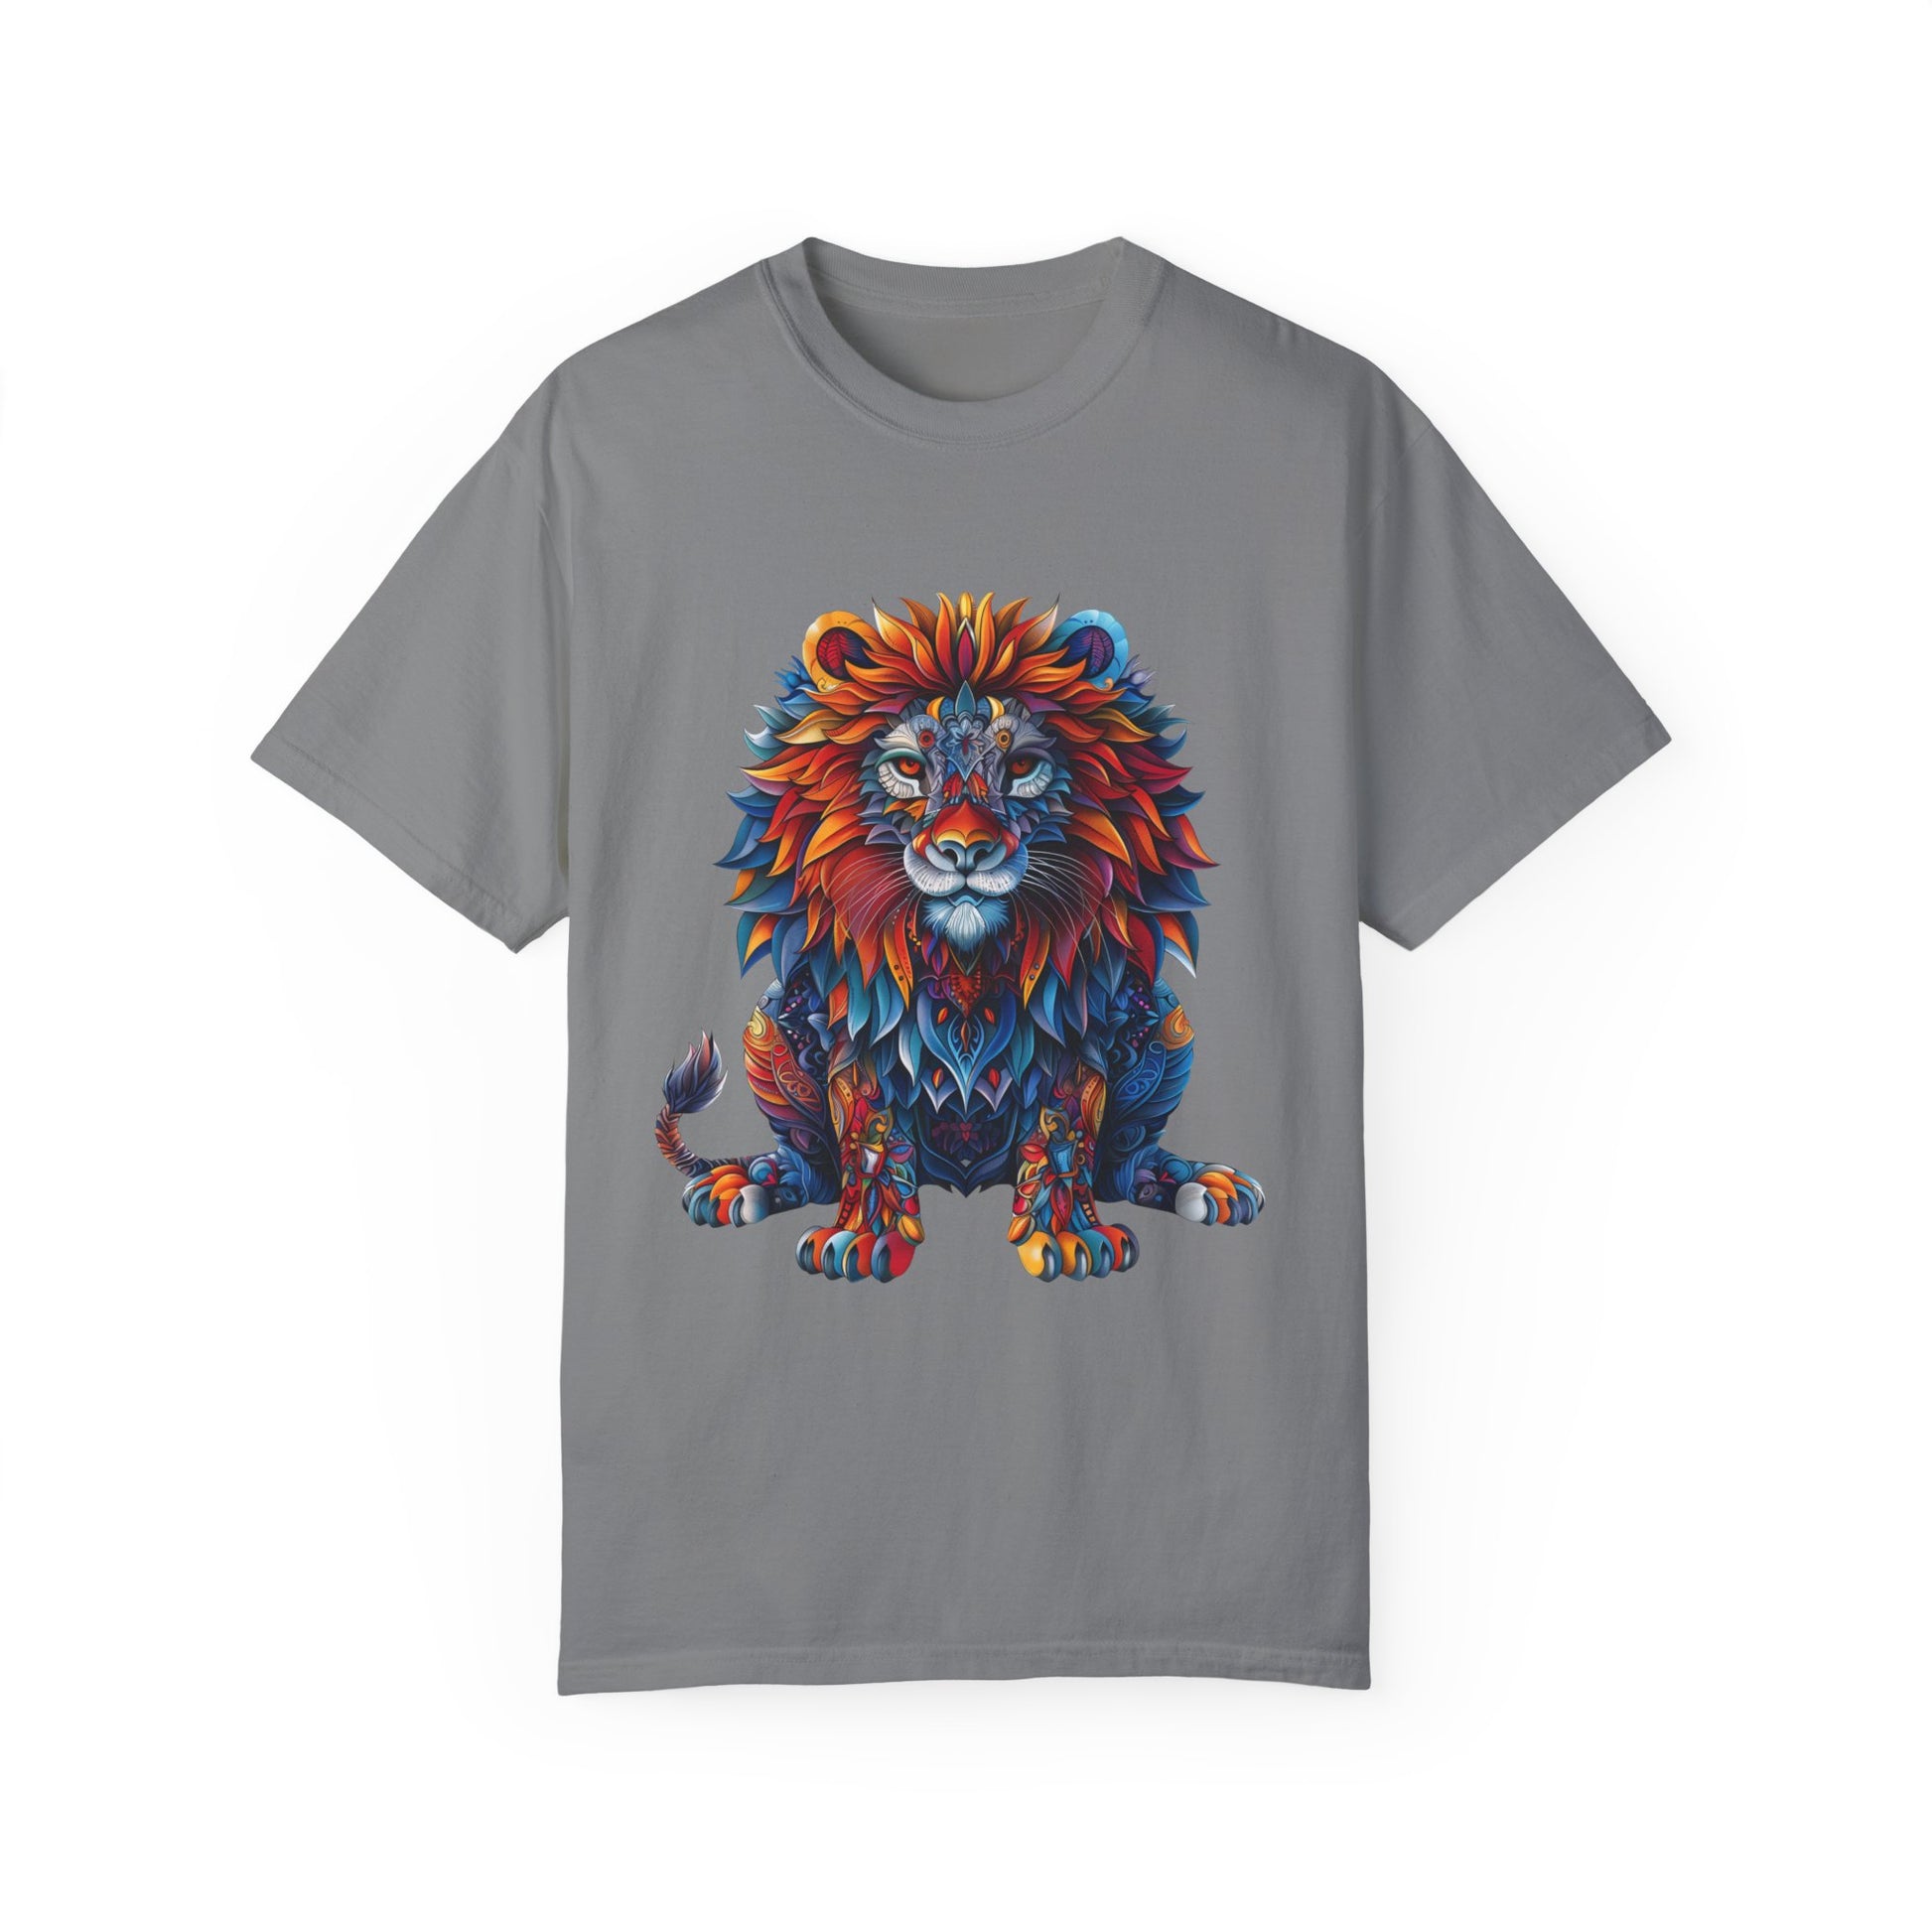 Lion Head Cool Graphic Design Novelty Unisex Garment-dyed T-shirt Cotton Funny Humorous Graphic Soft Premium Unisex Men Women Grey T-shirt Birthday Gift-9